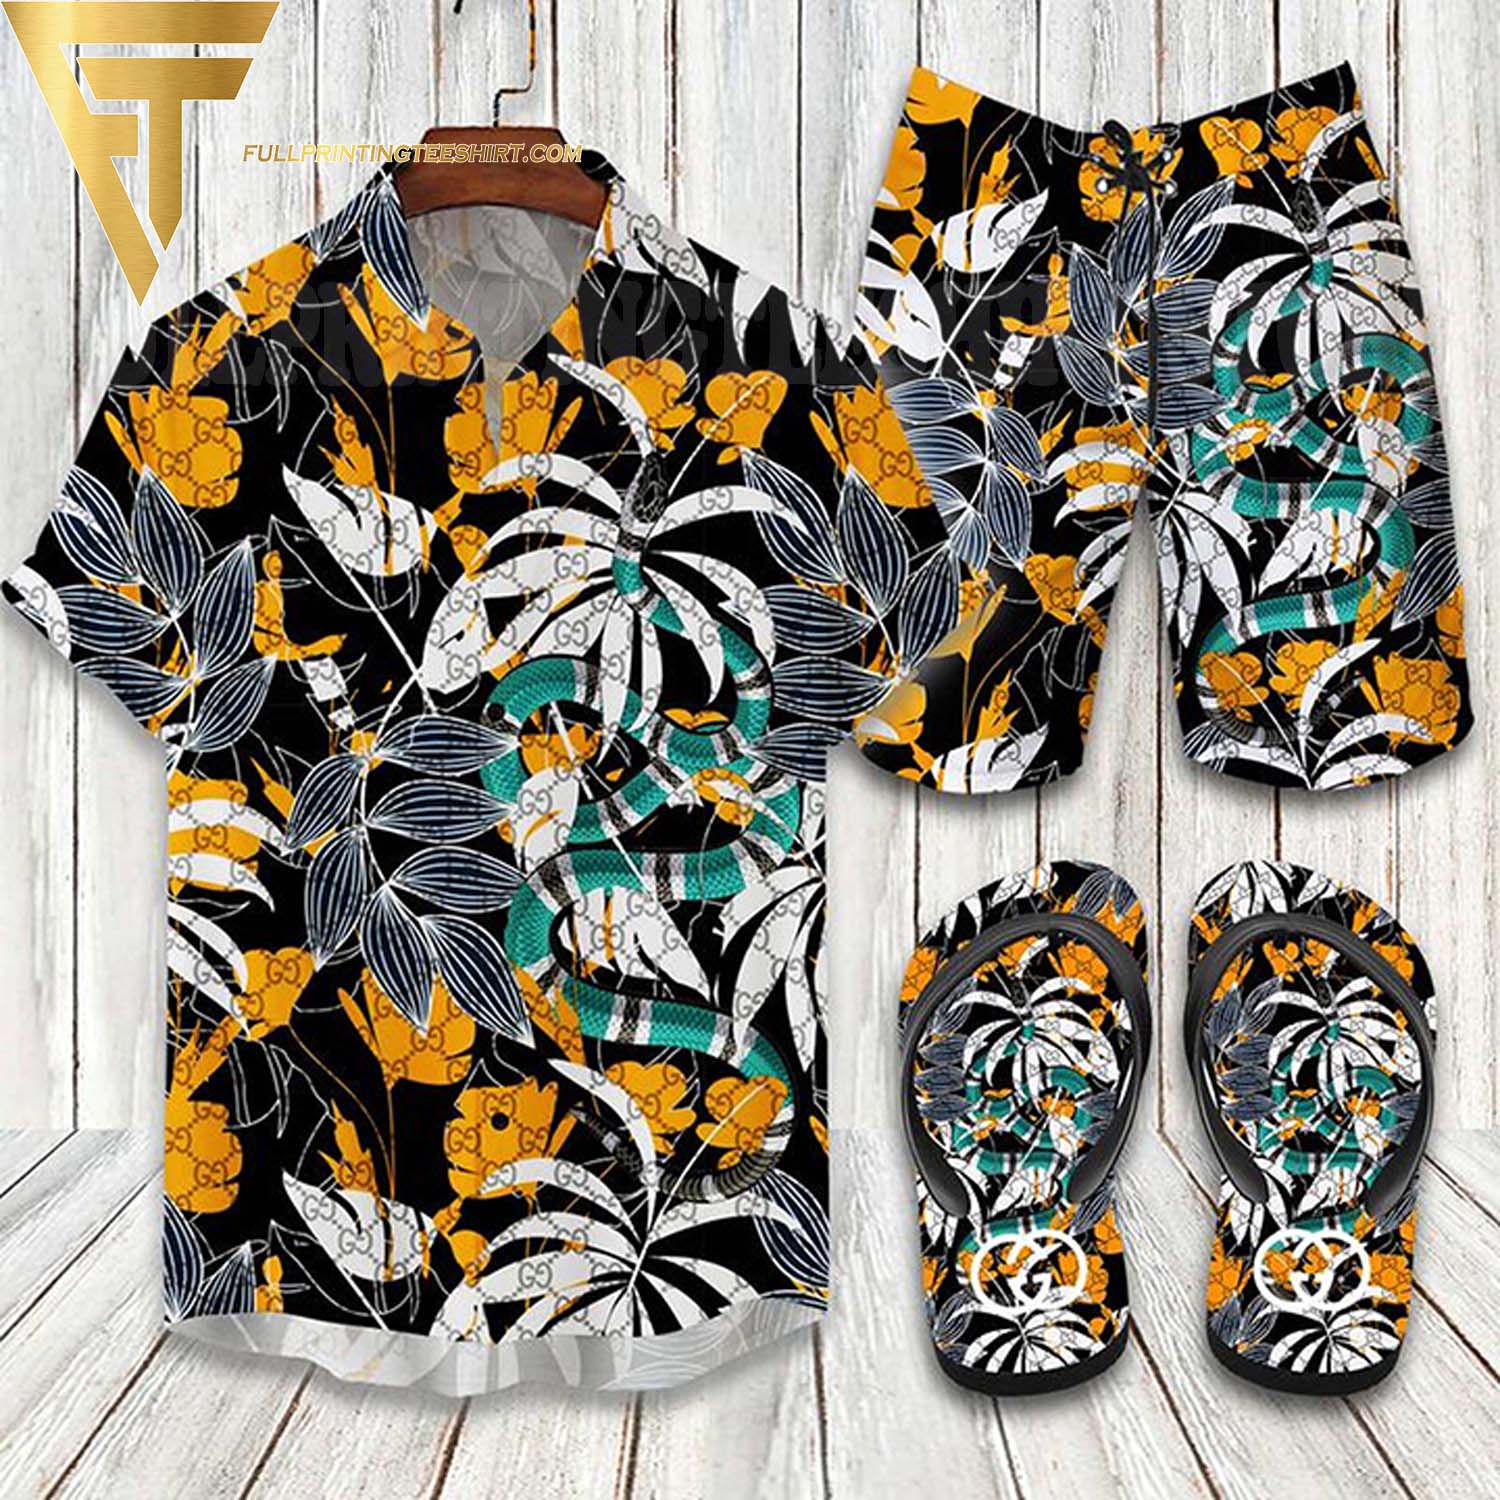 Top-selling item] Gucci Tropical Snake Hawaii Shirt Shorts Set And Flip  Flops